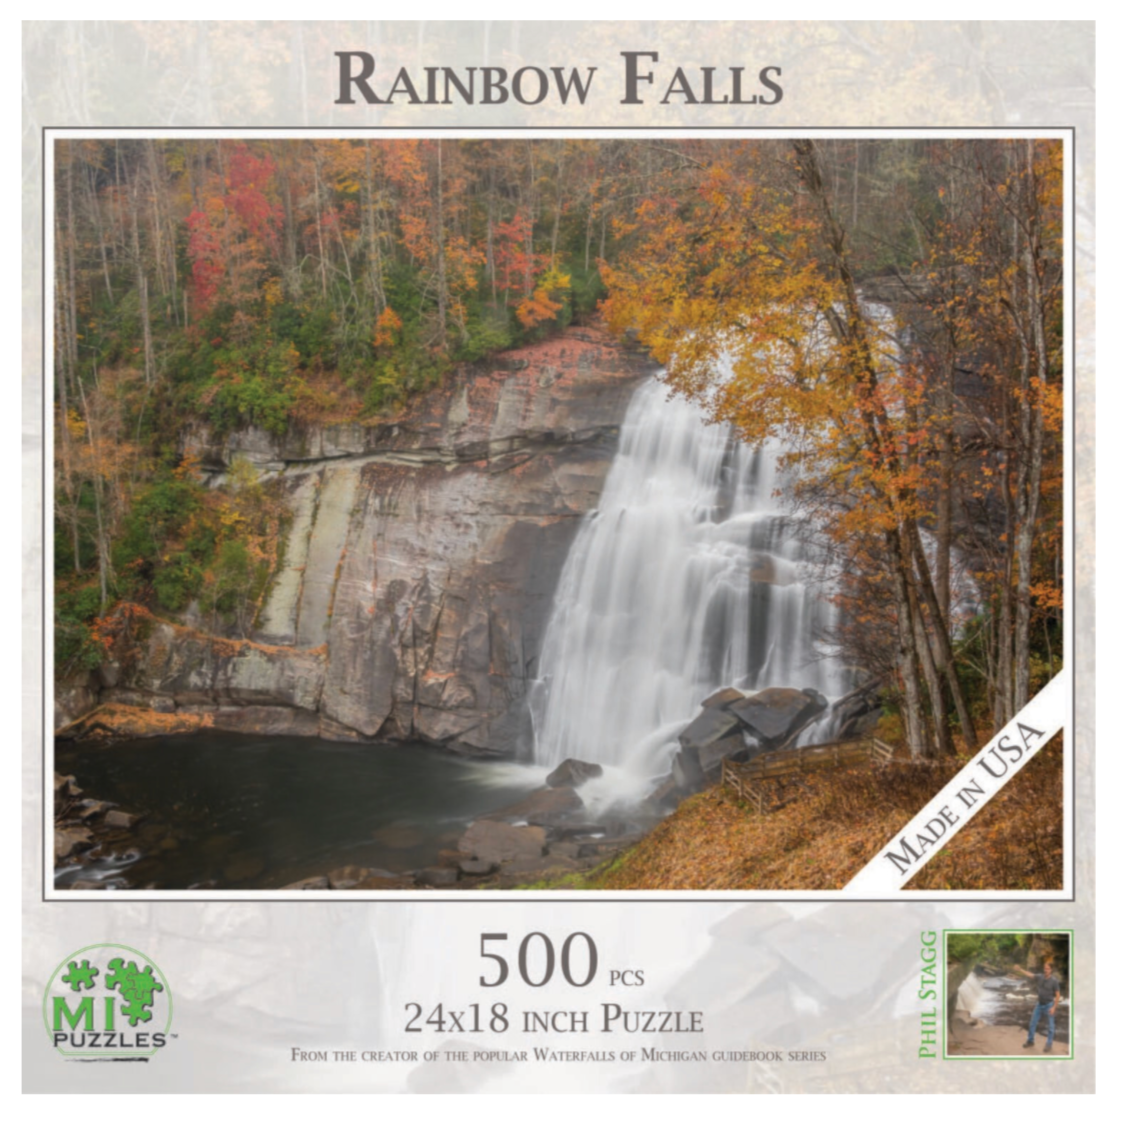 Rainbow Falls 500 pc Jigsaw Puzzle